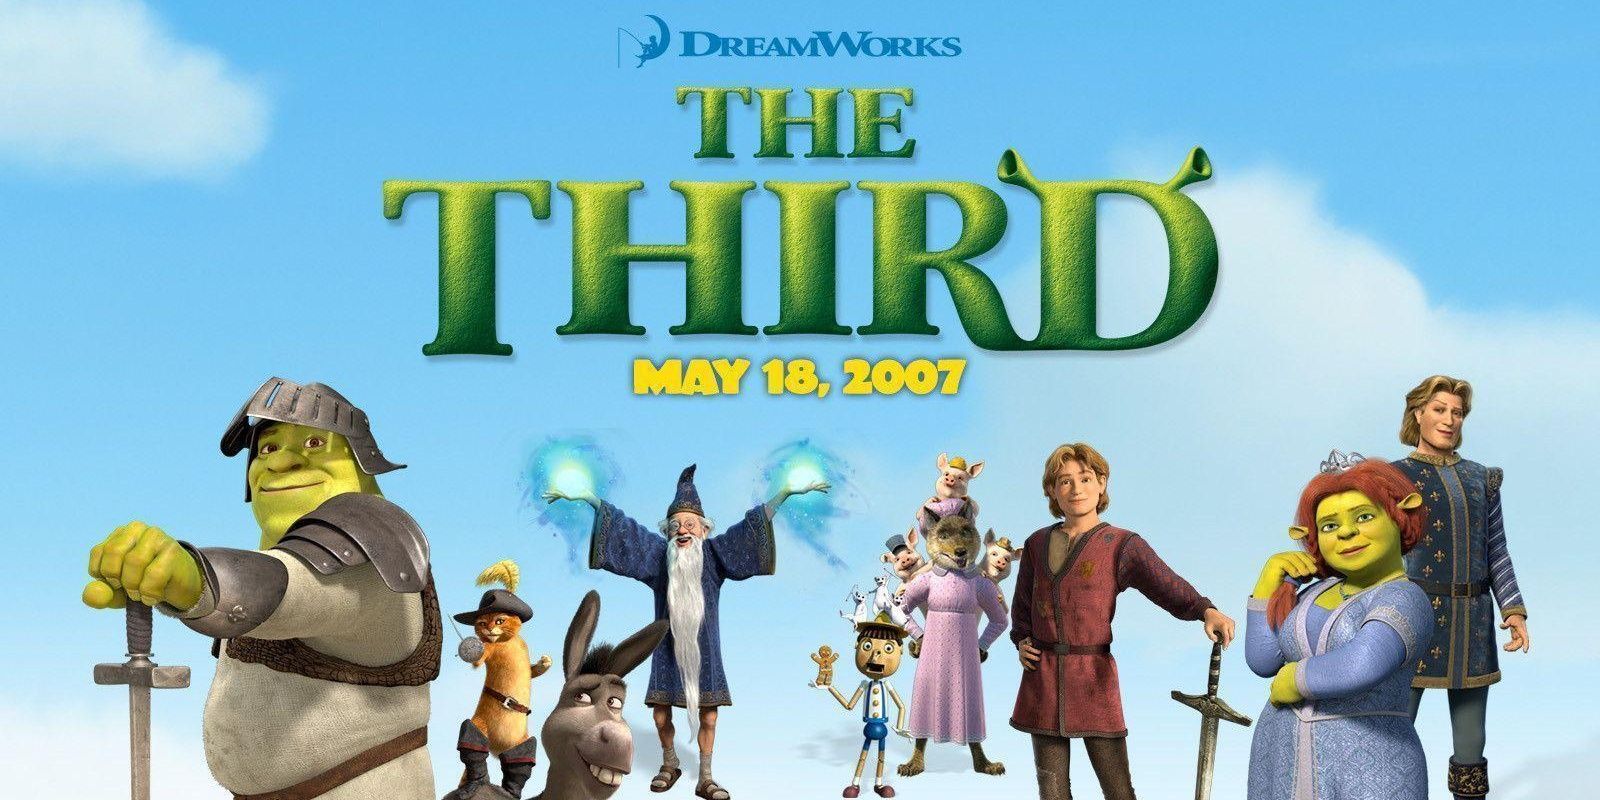 Promotional photo for Shrek the Third.